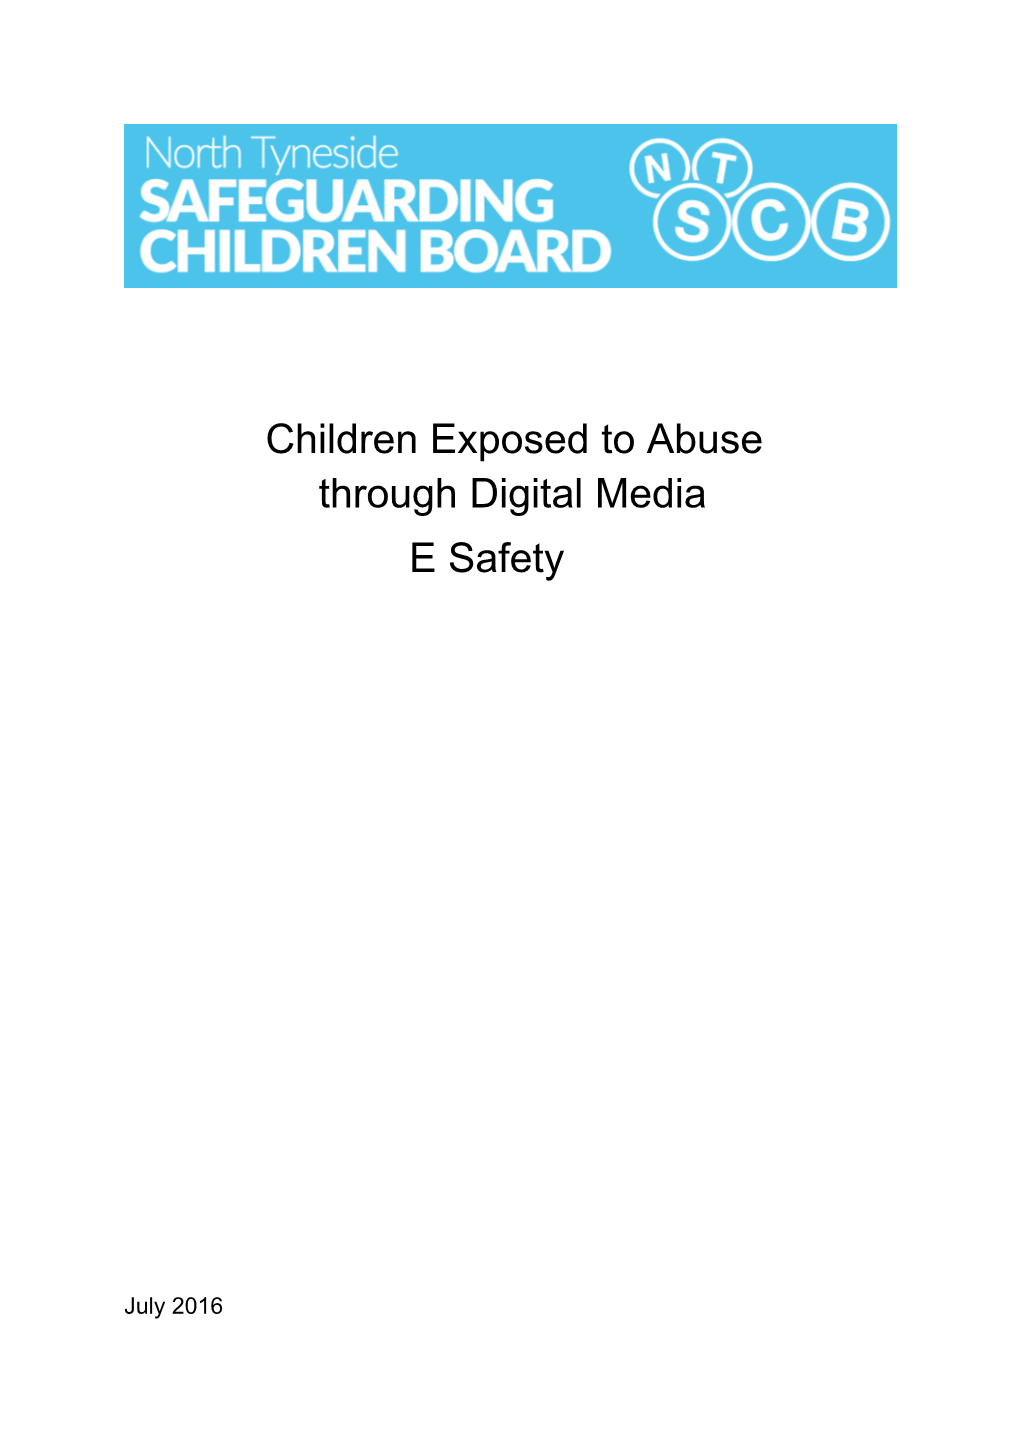 Children Exposed to Abuse Through Digital Media